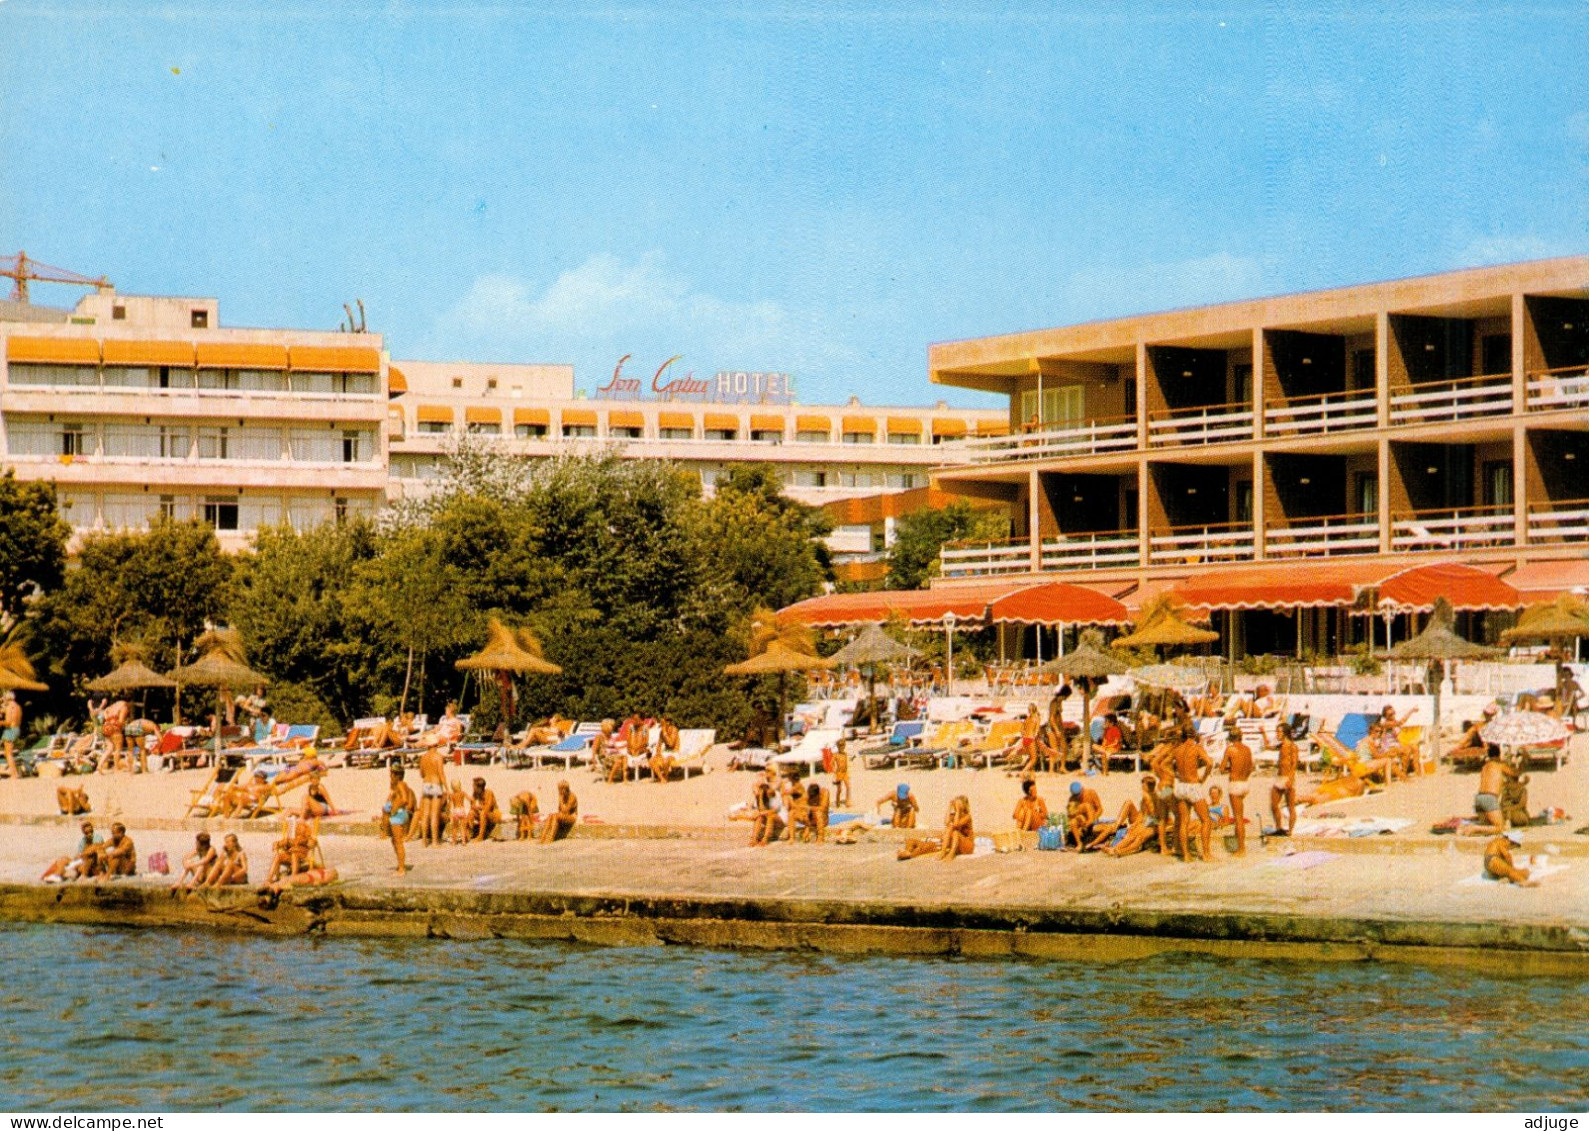 CPM- MALLORCA- Hotel Son Caliu - Palma Nova * TBE - Mallorca